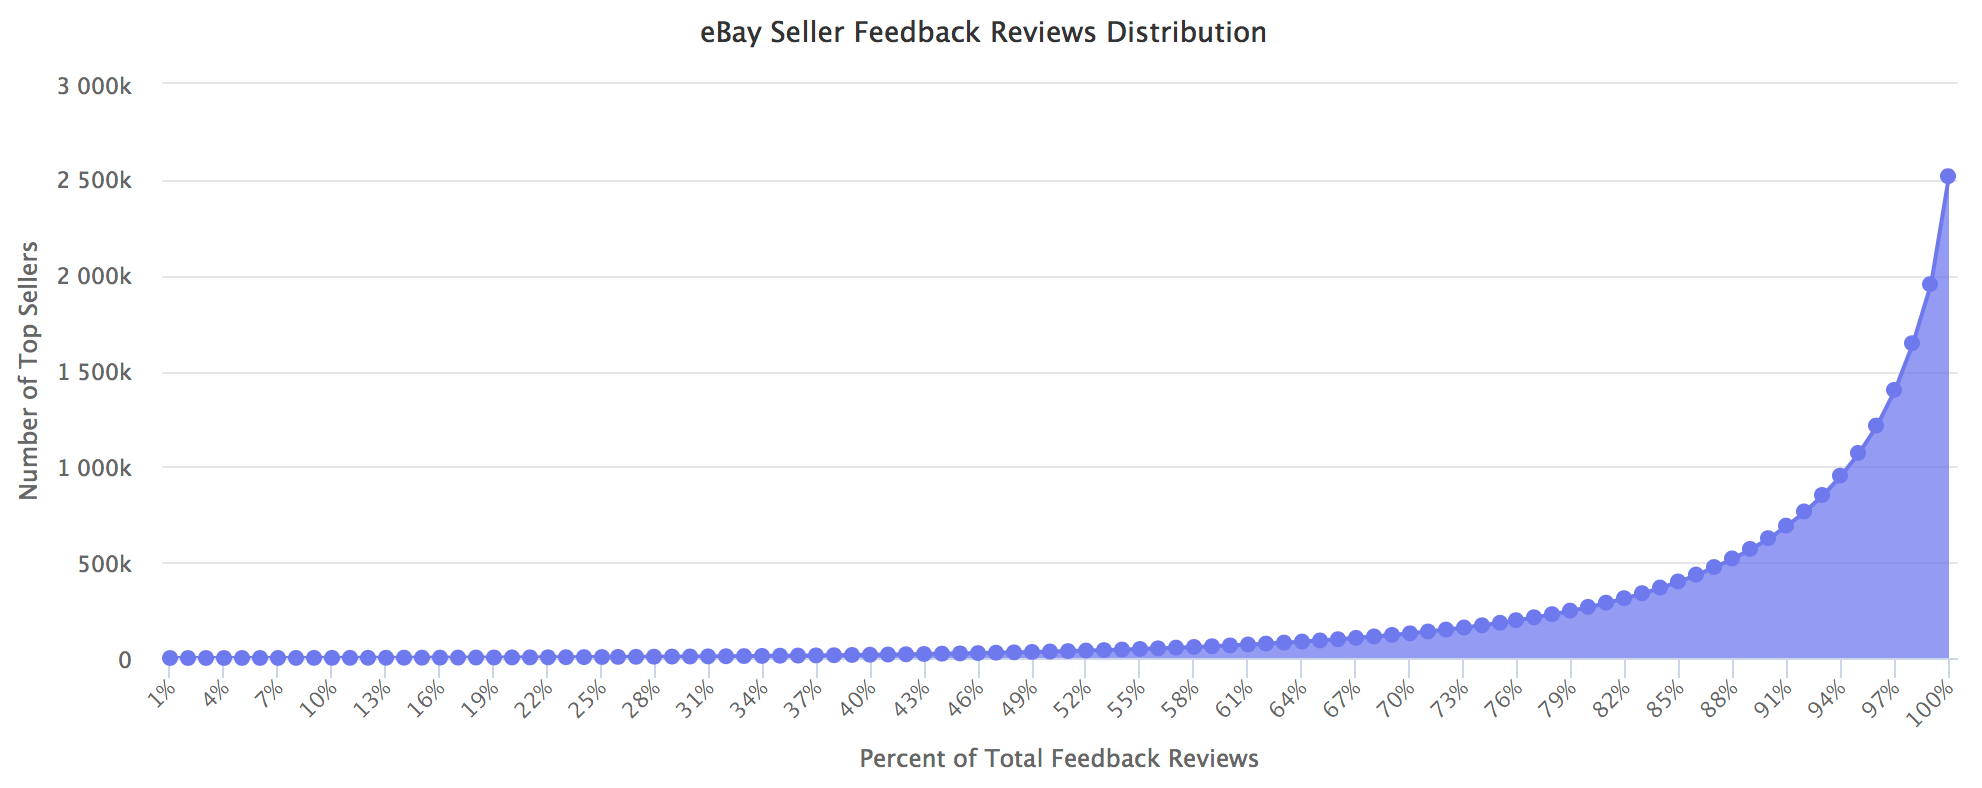 eBay Seller Feedback Reviews